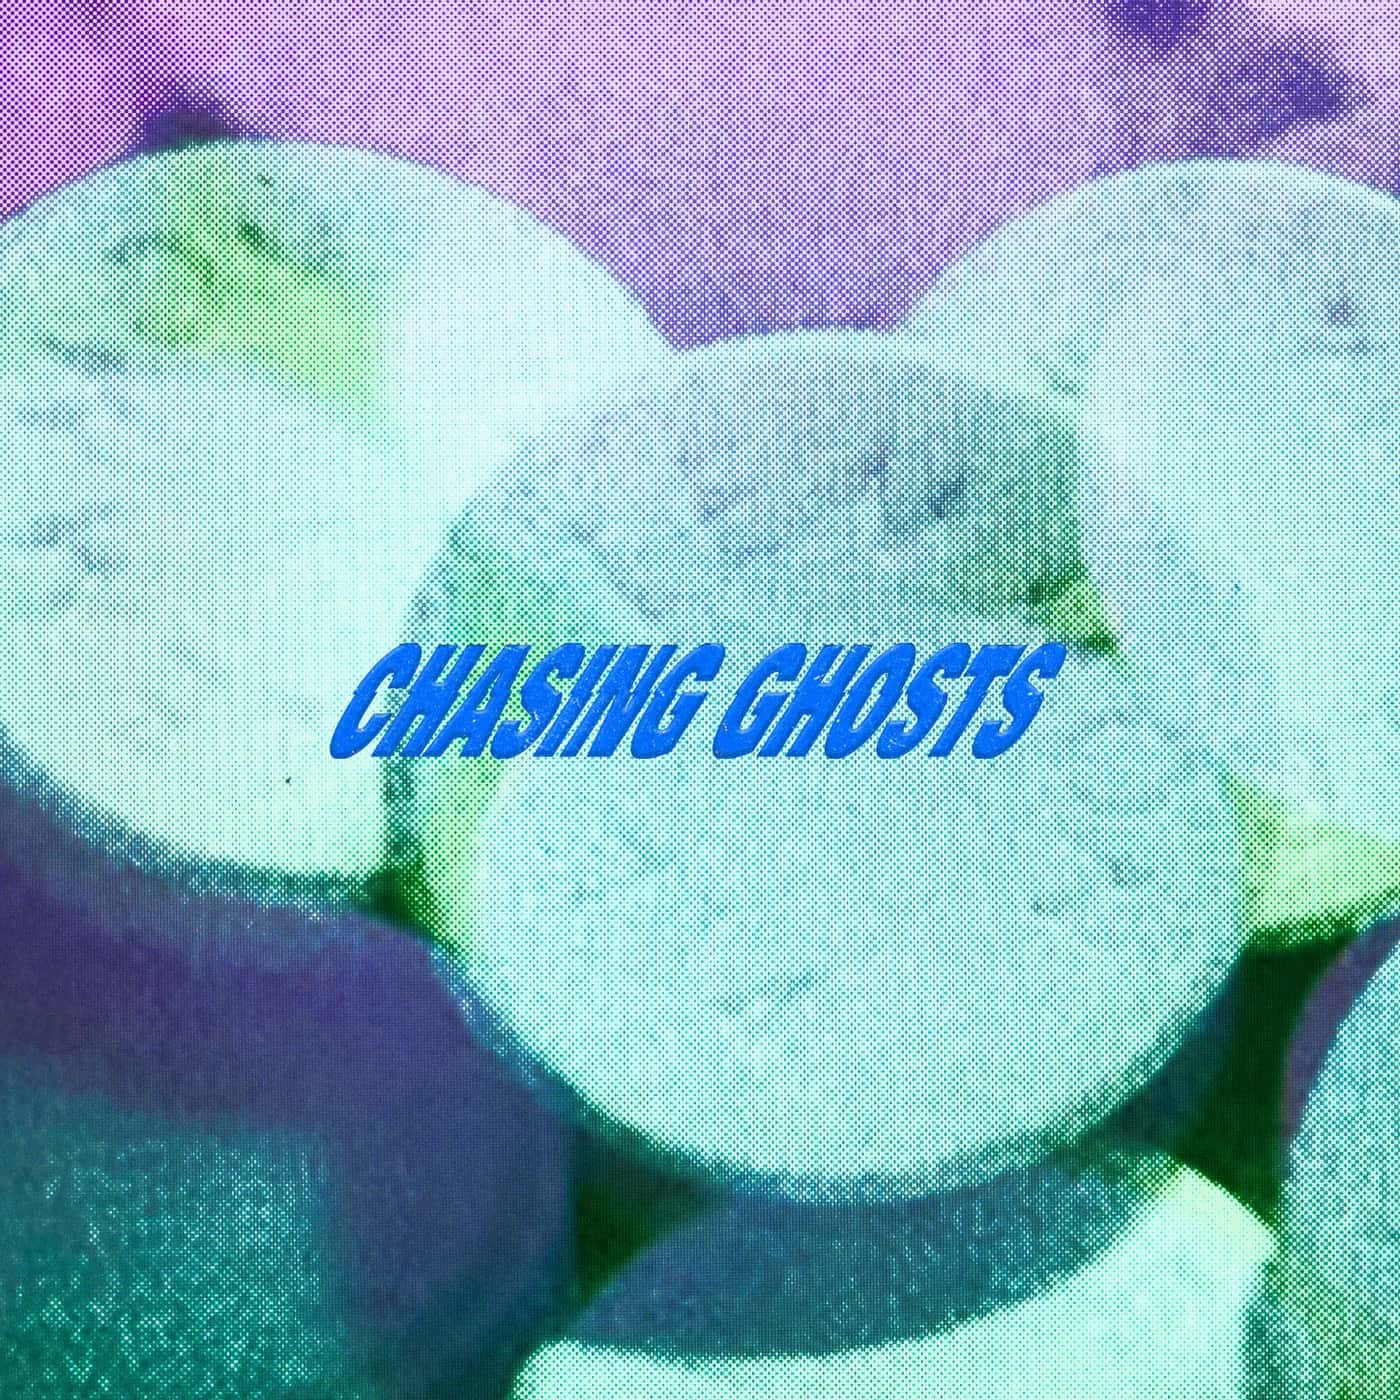 image cover: Benjamin Fröhlich, Longhair, Chasing Ghosts - Chasing Ghosts / PLEASURE04